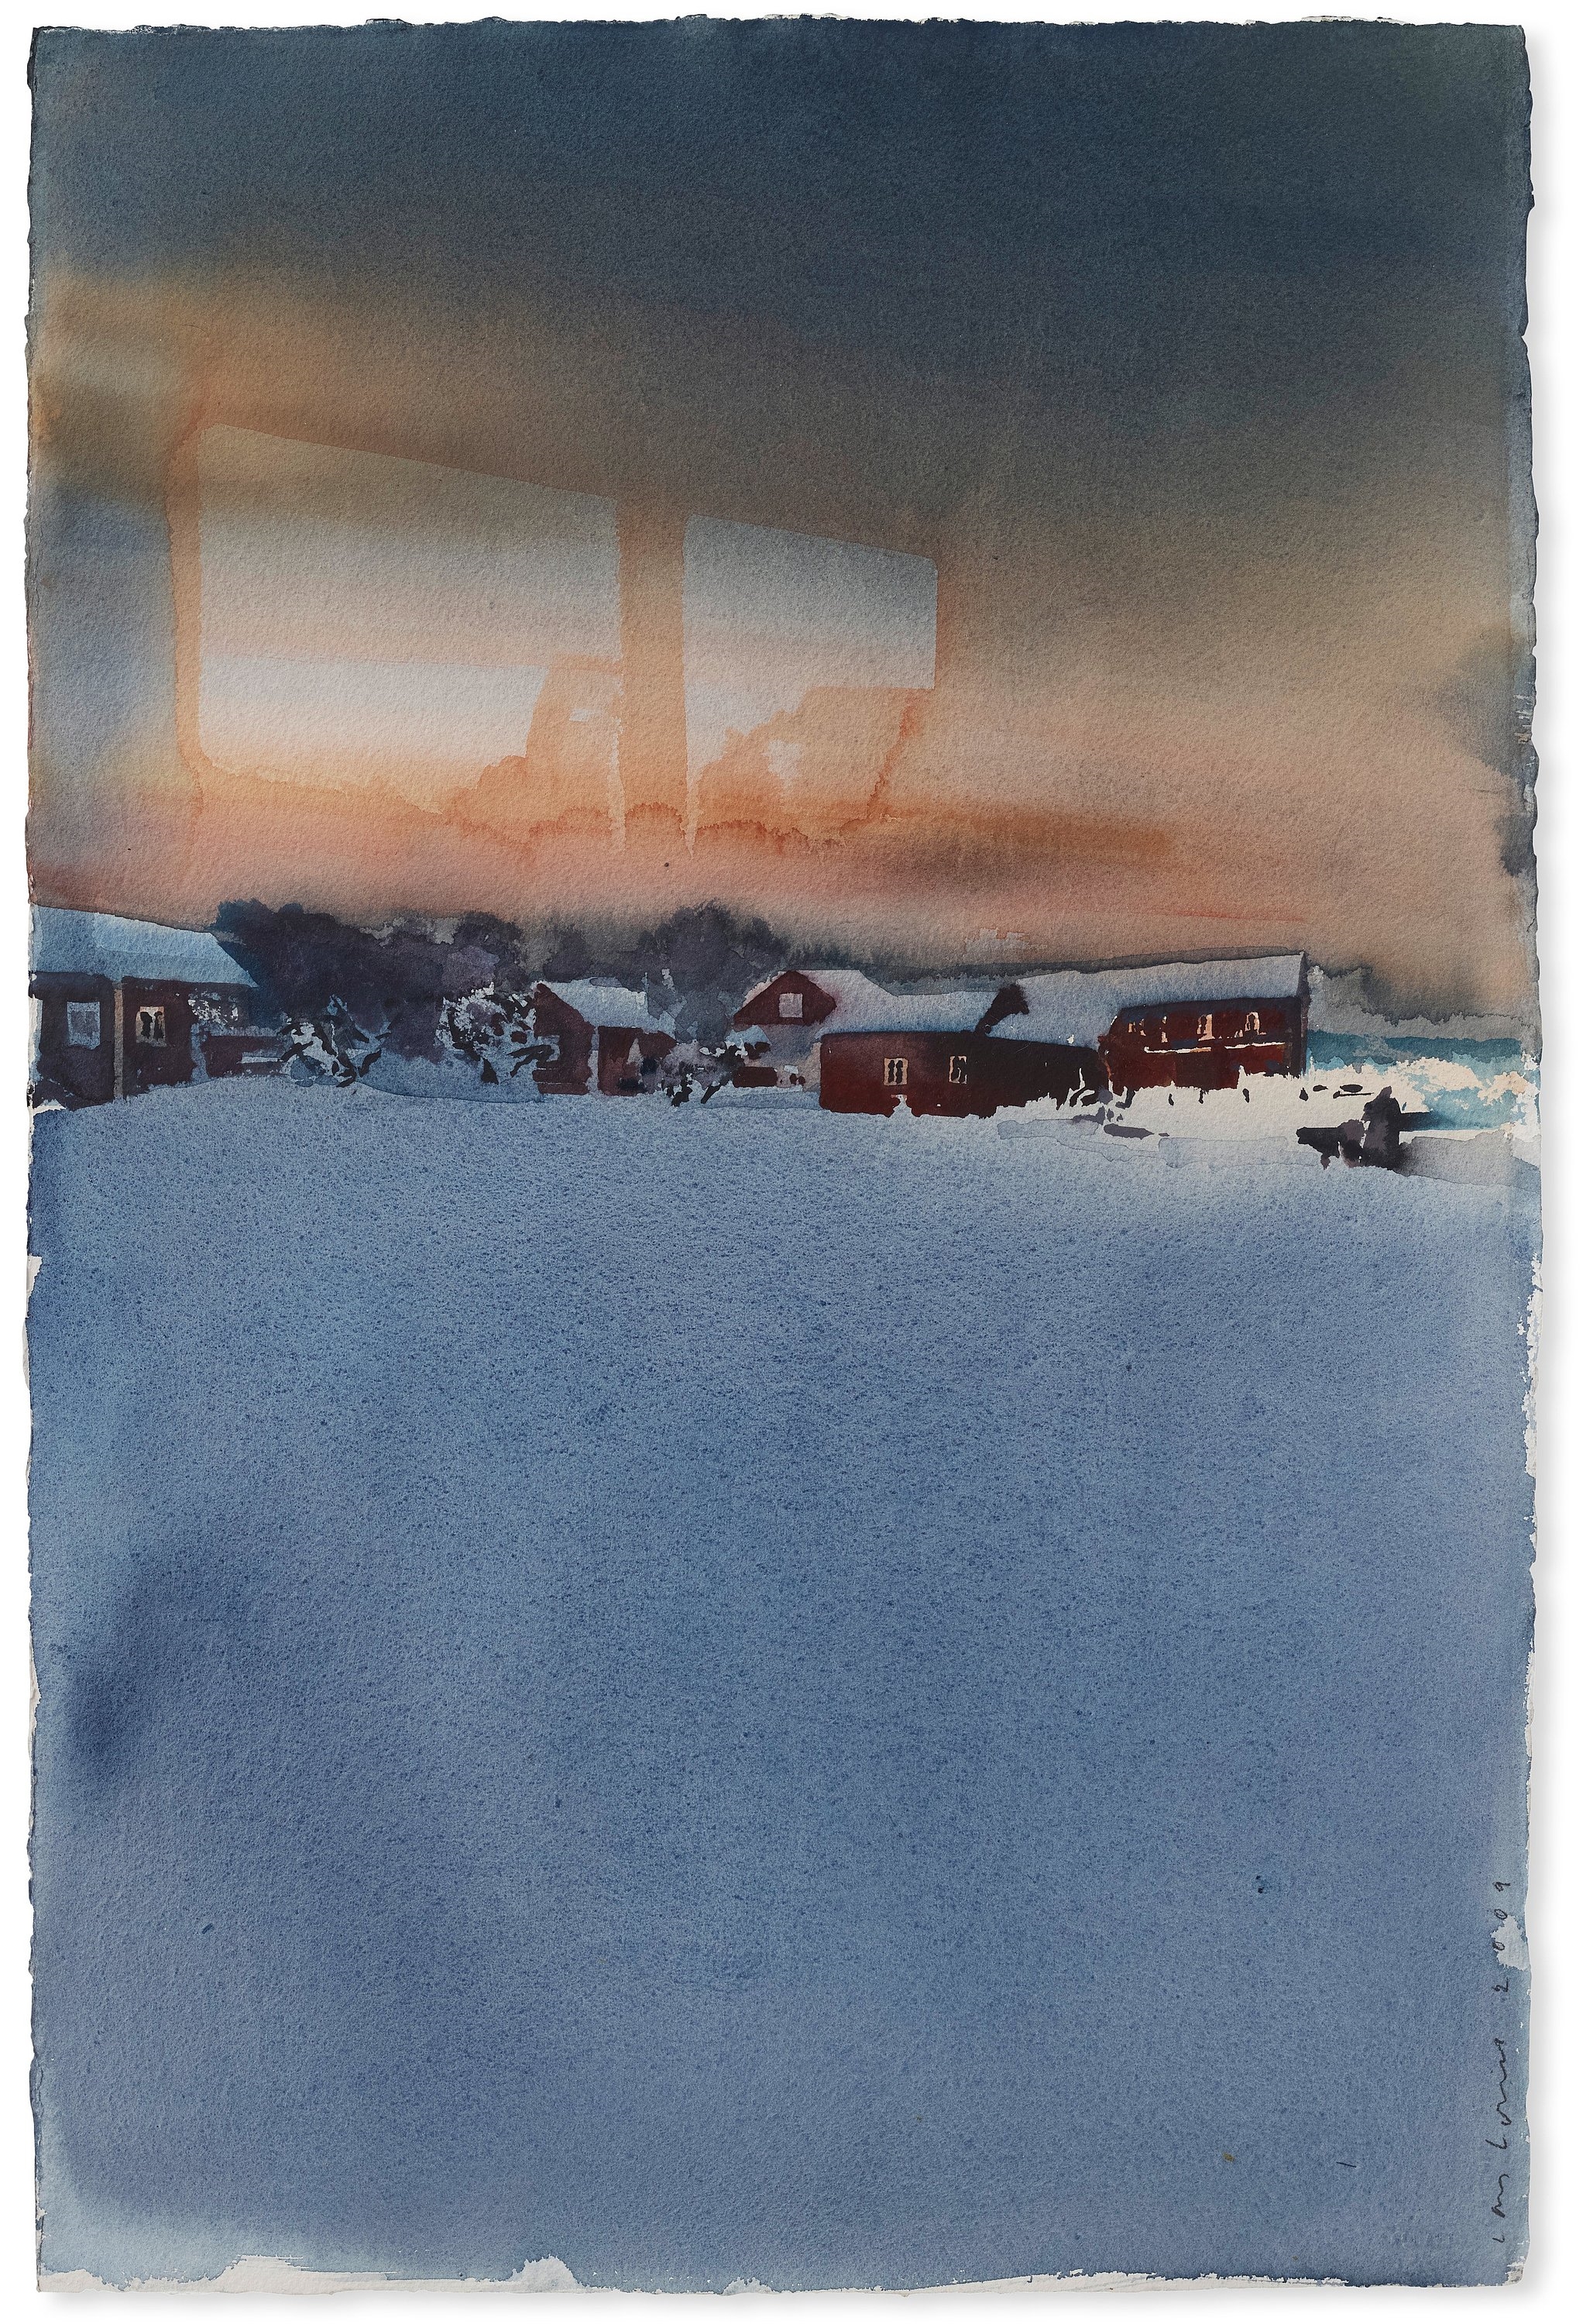 'Vinterresa' by Lars Lerin, dated 2009